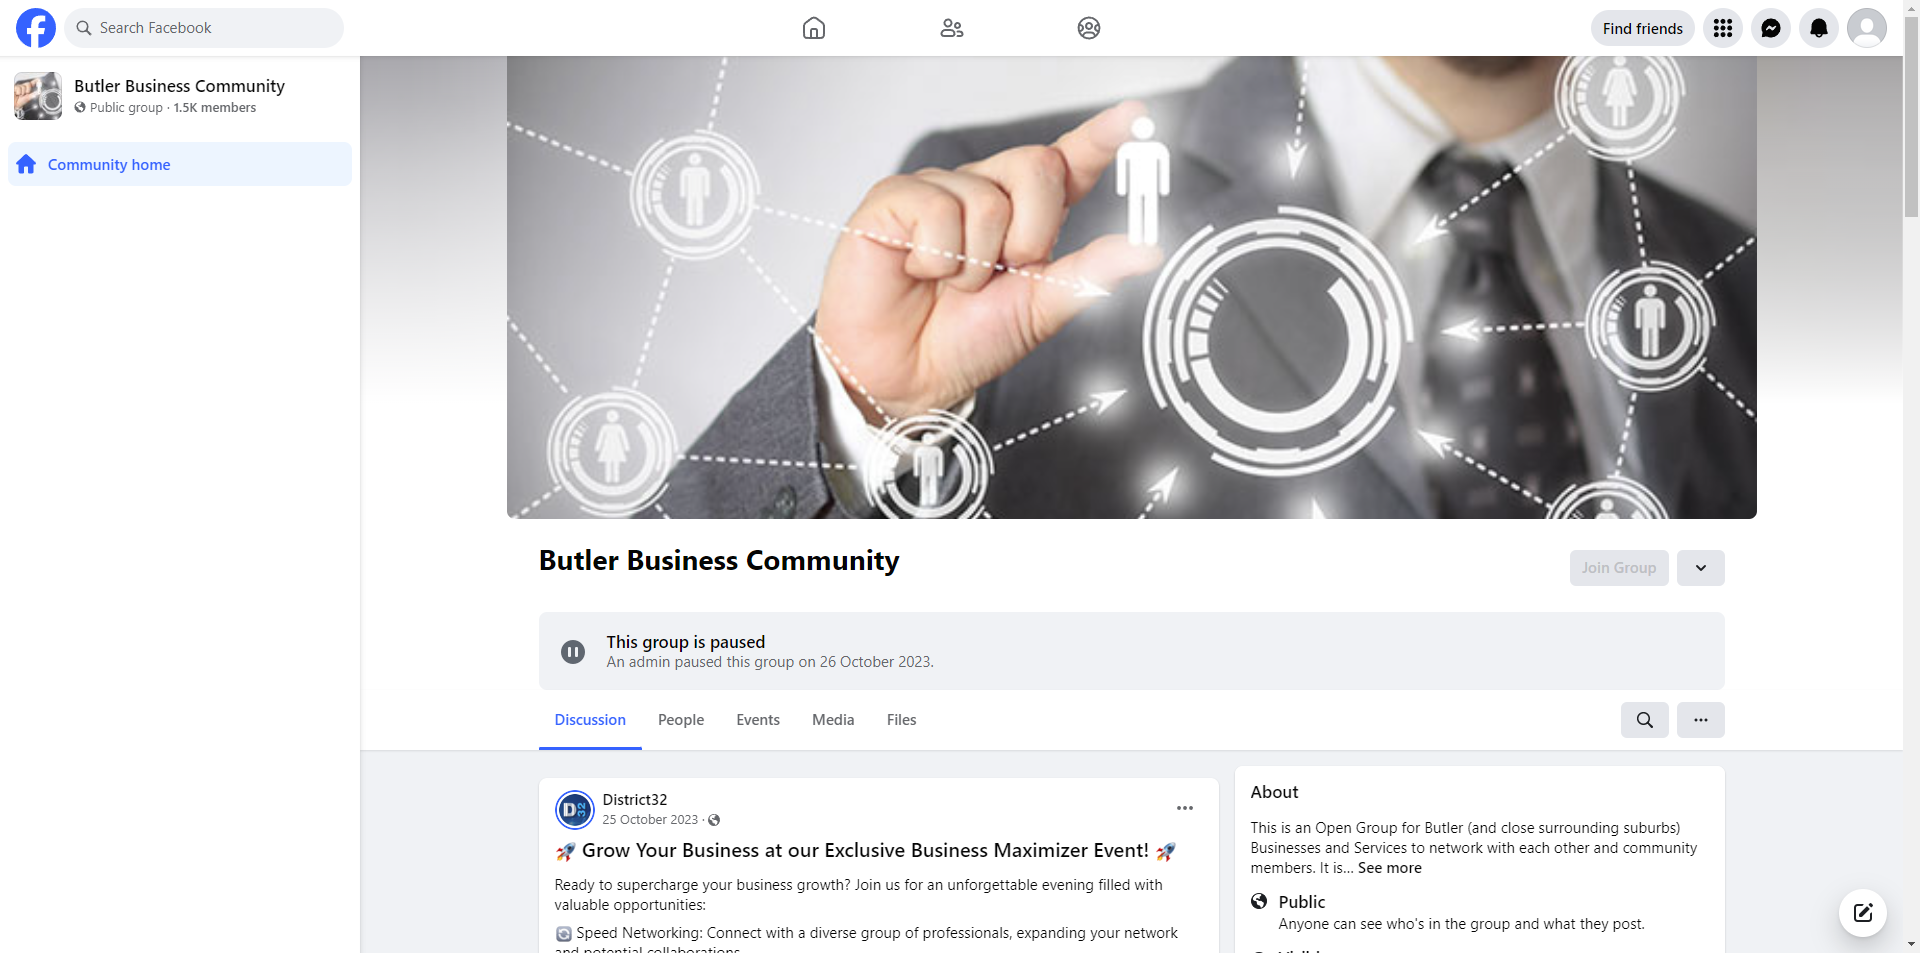 Butler Business Community